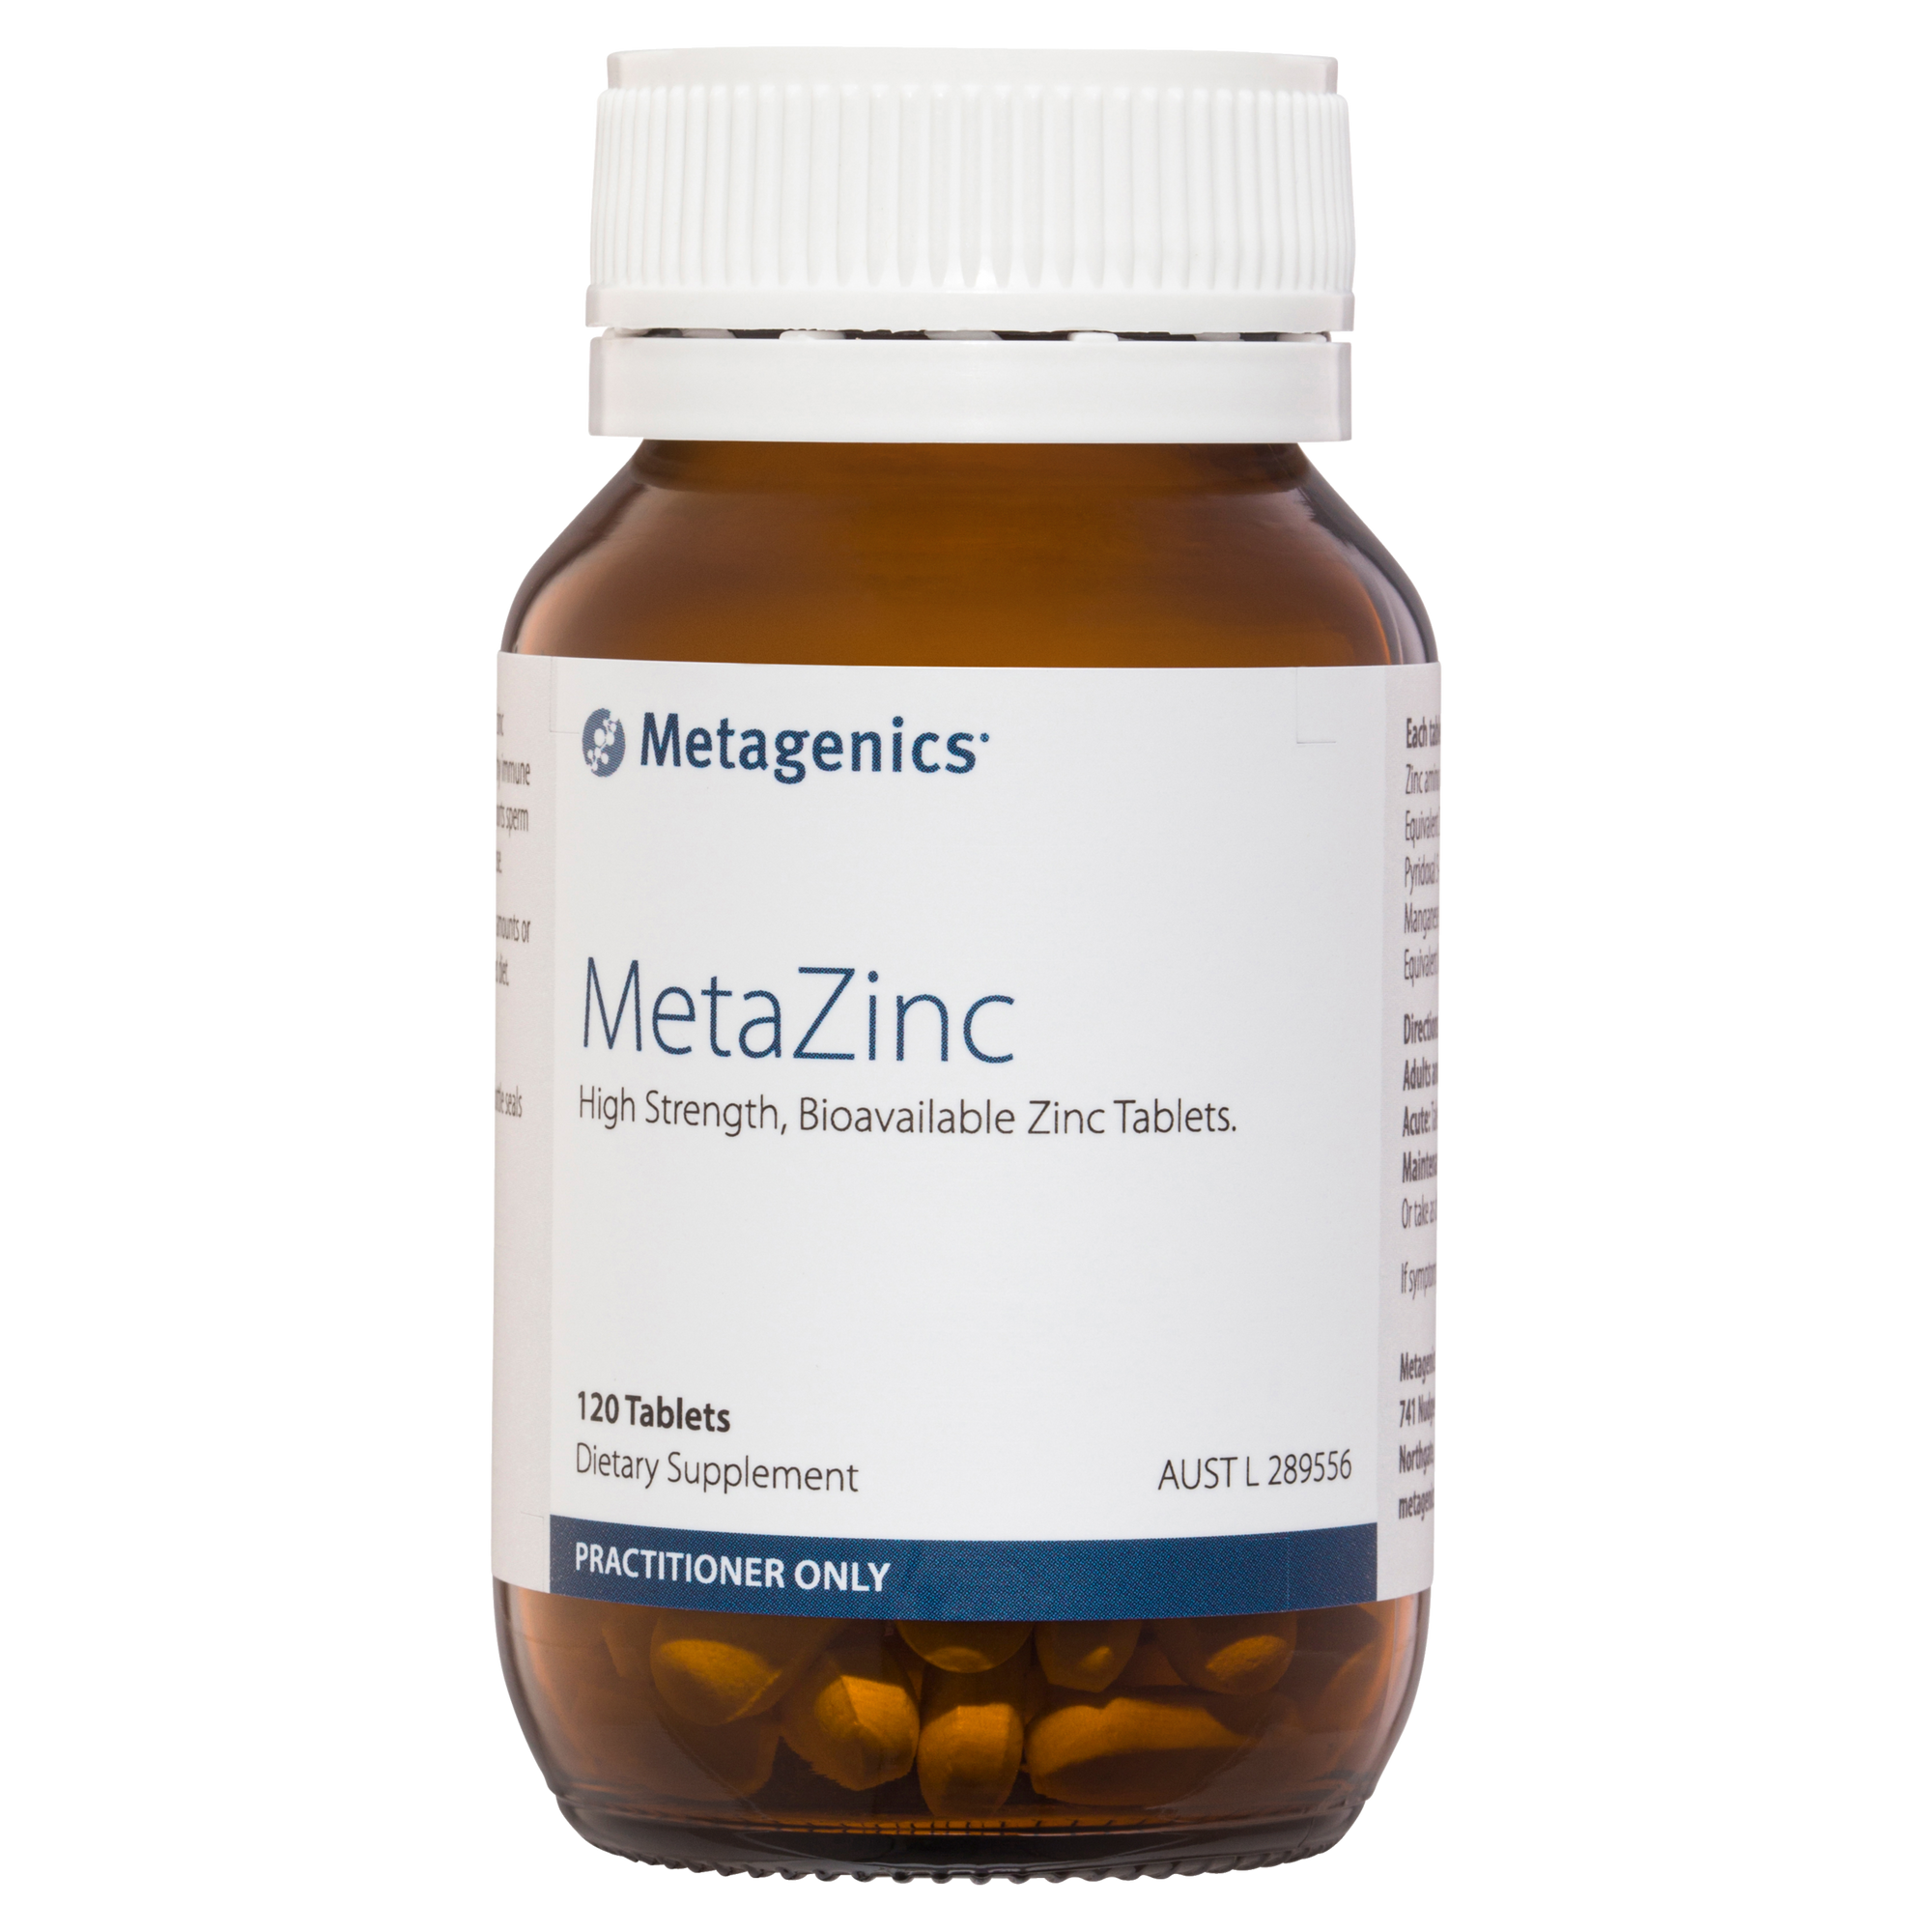 Metagenics MetaZinc Tablets